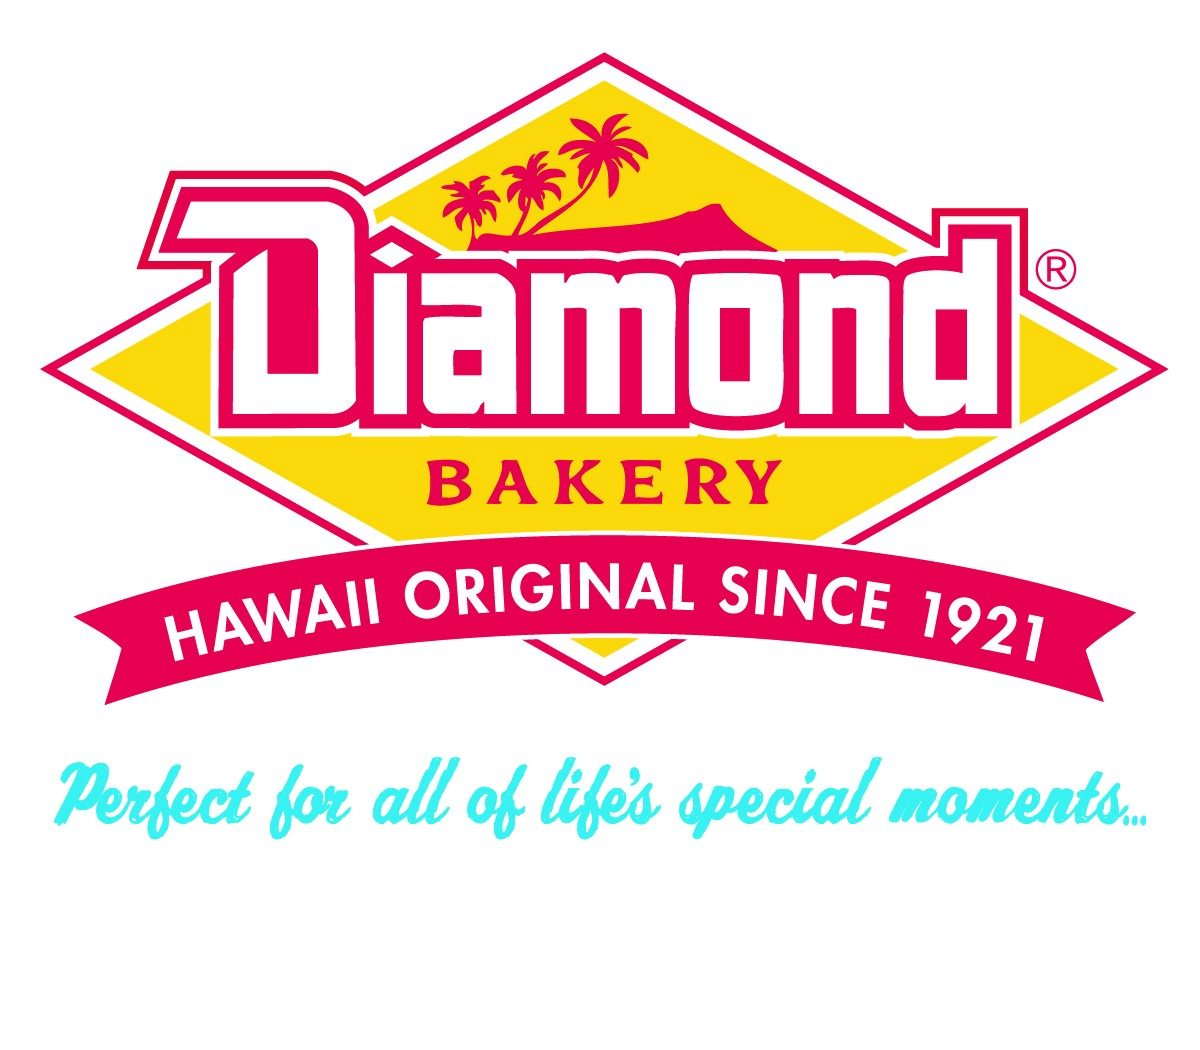 6. Diamond Bakery (Silver)